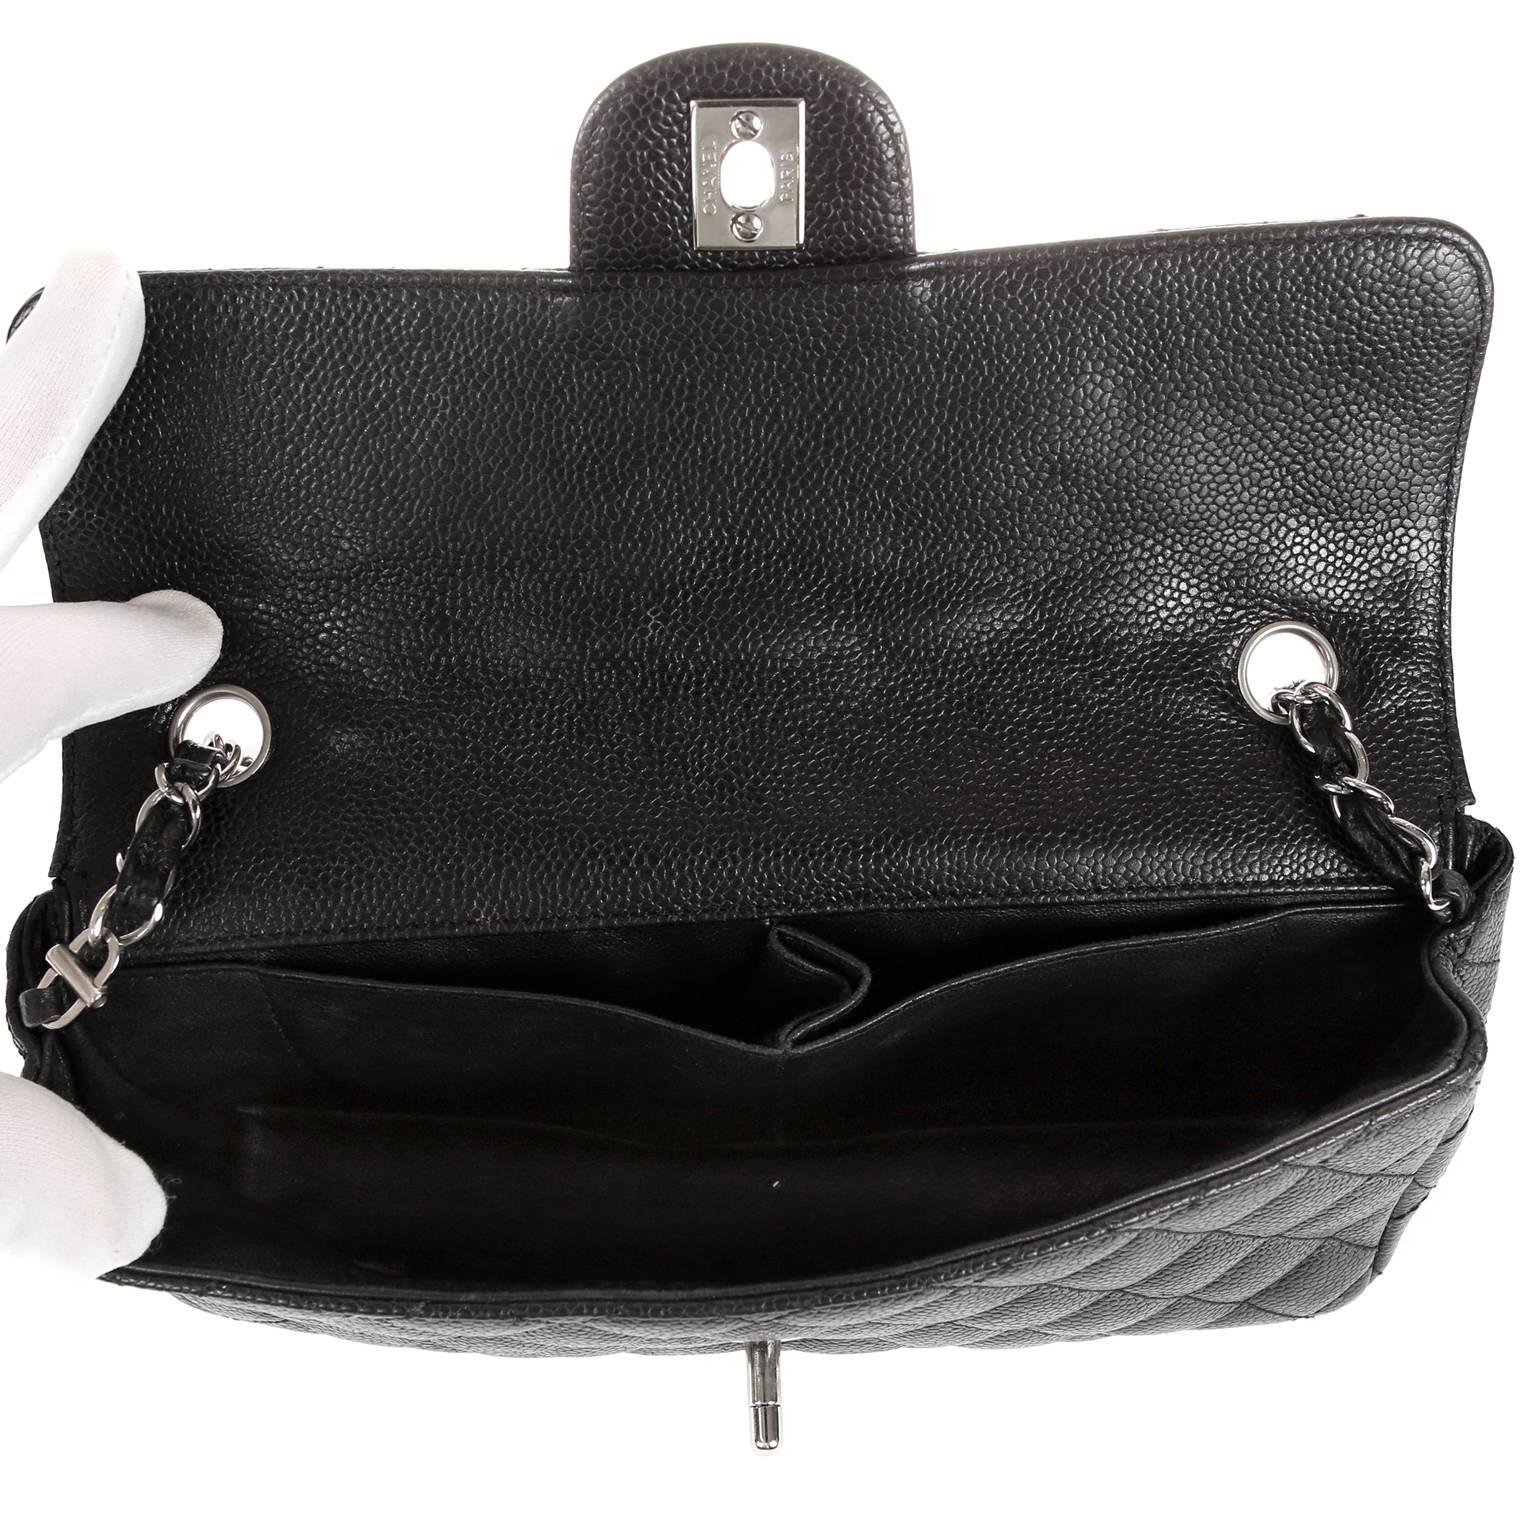 Chanel Black Caviar Leather East West Flap Bag 3